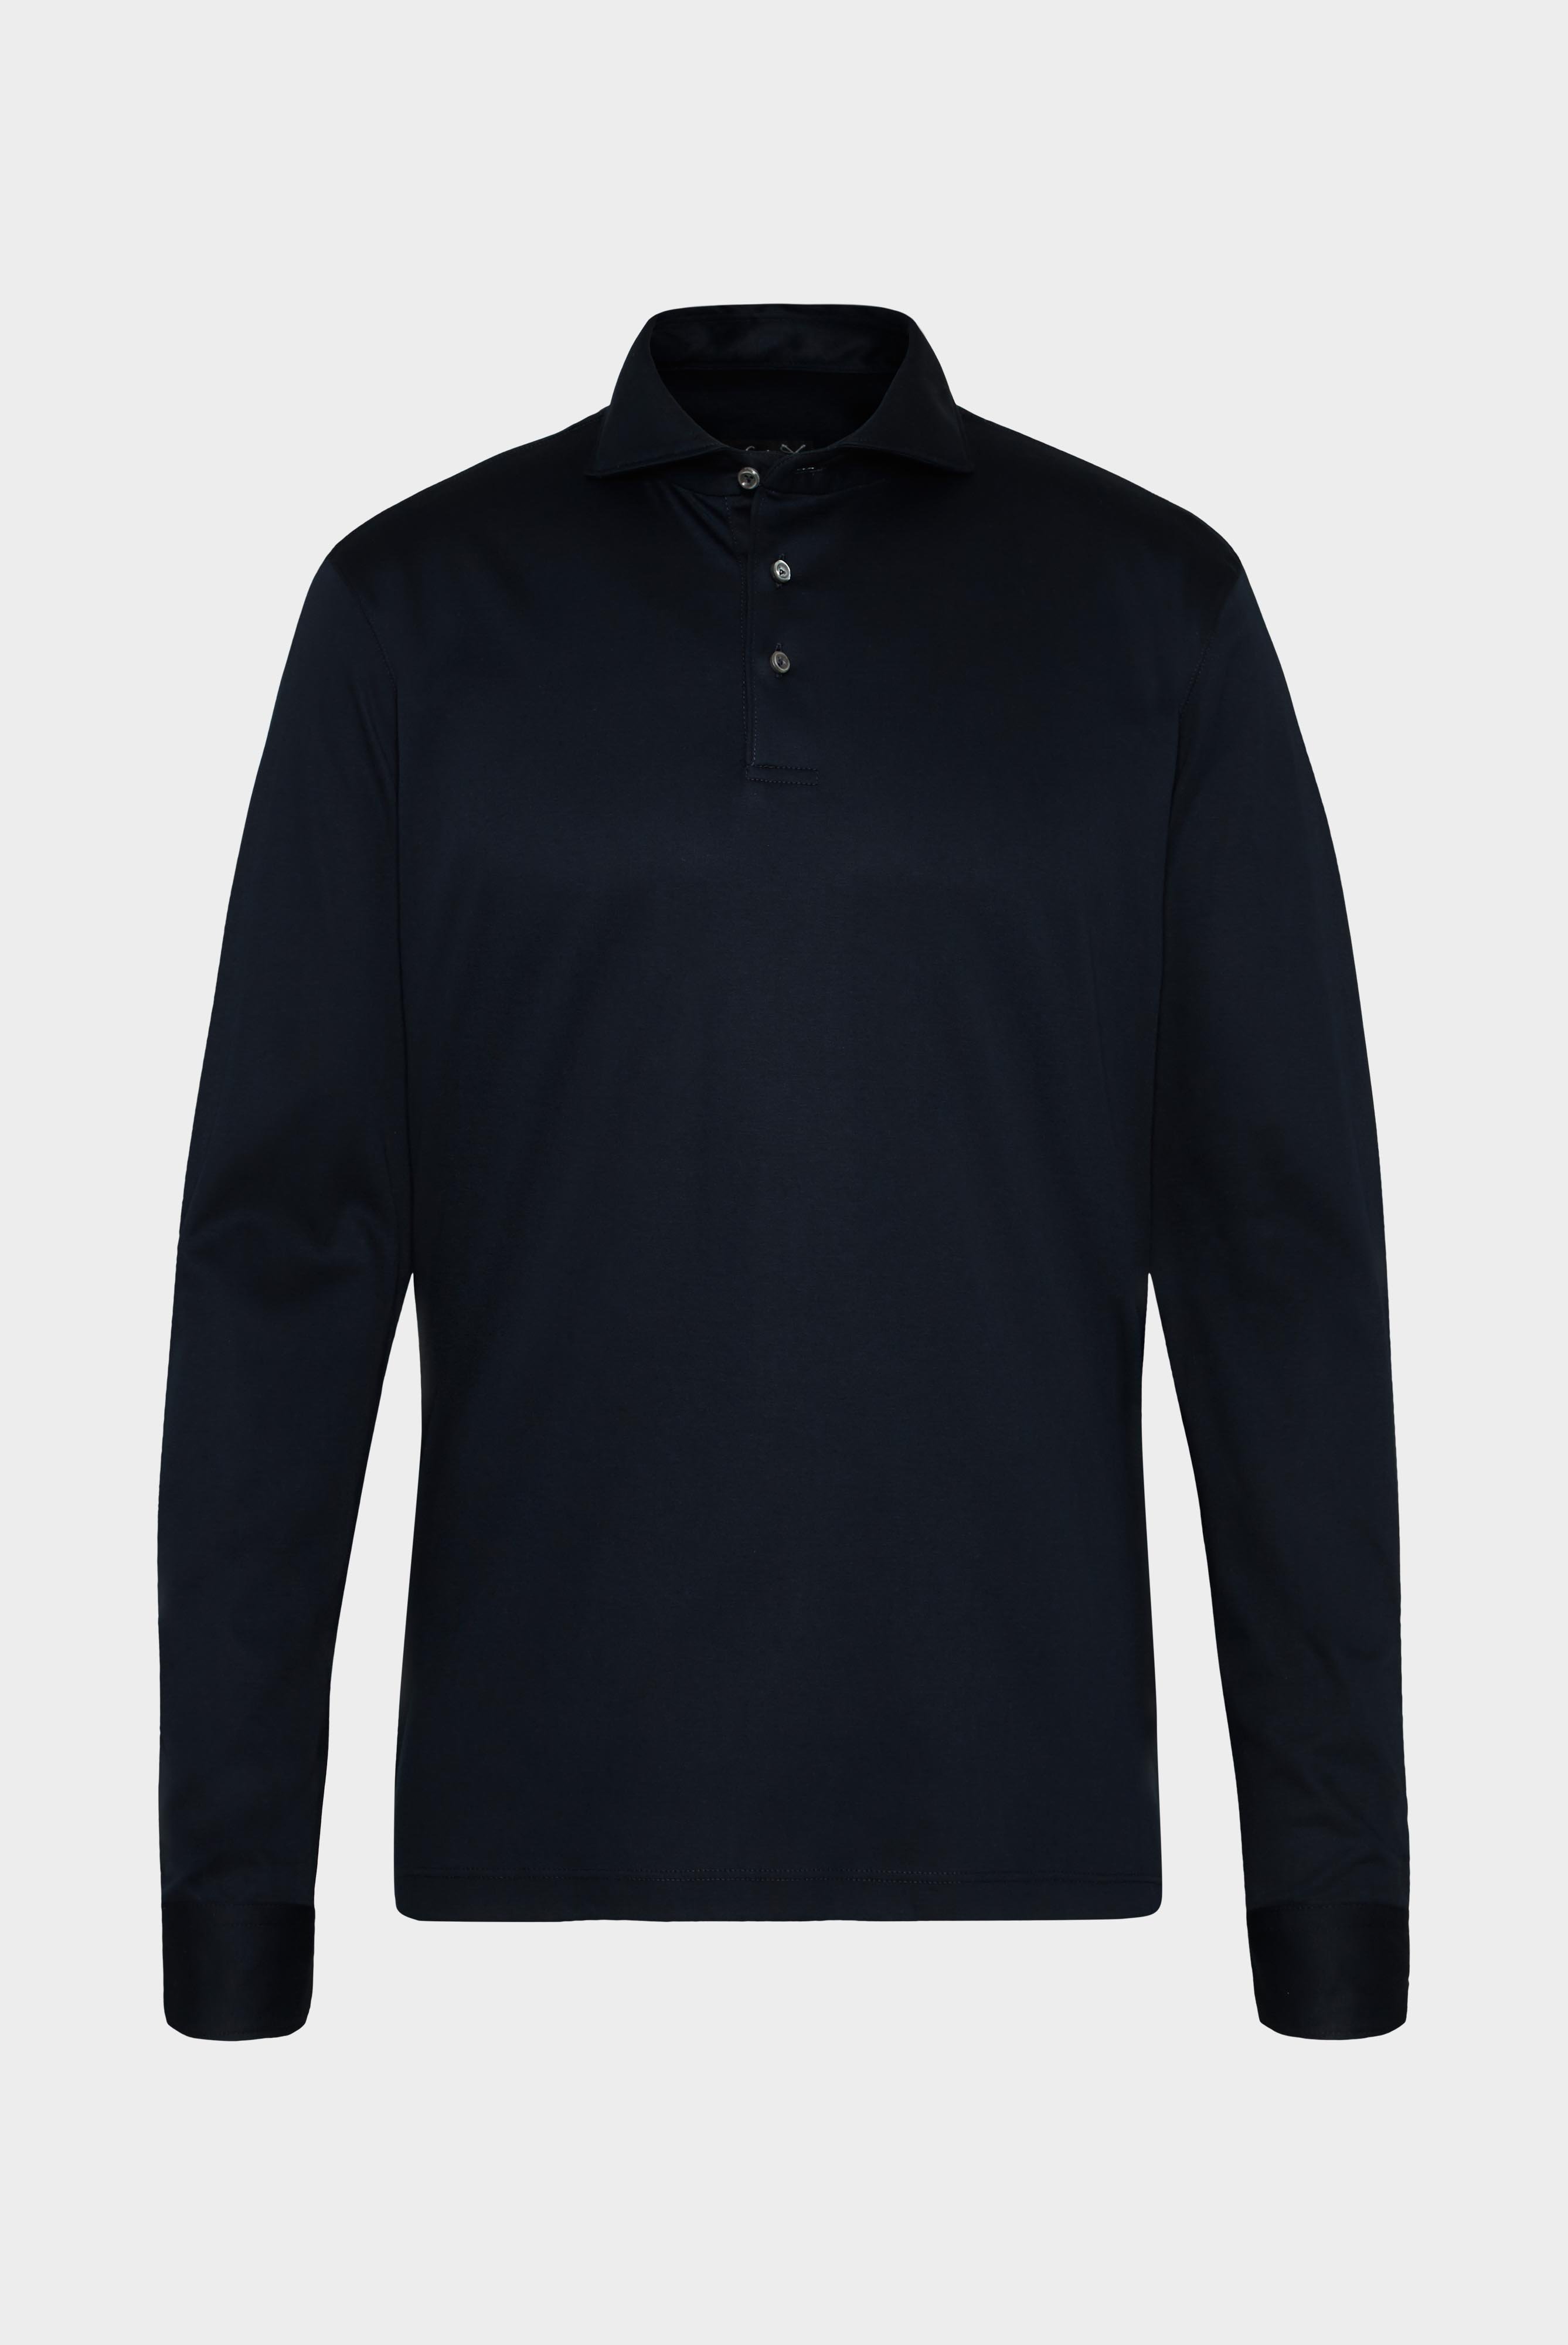 Poloshirts+Langarm Jersey Poloshirt+20.1726.UC.180031.790.L